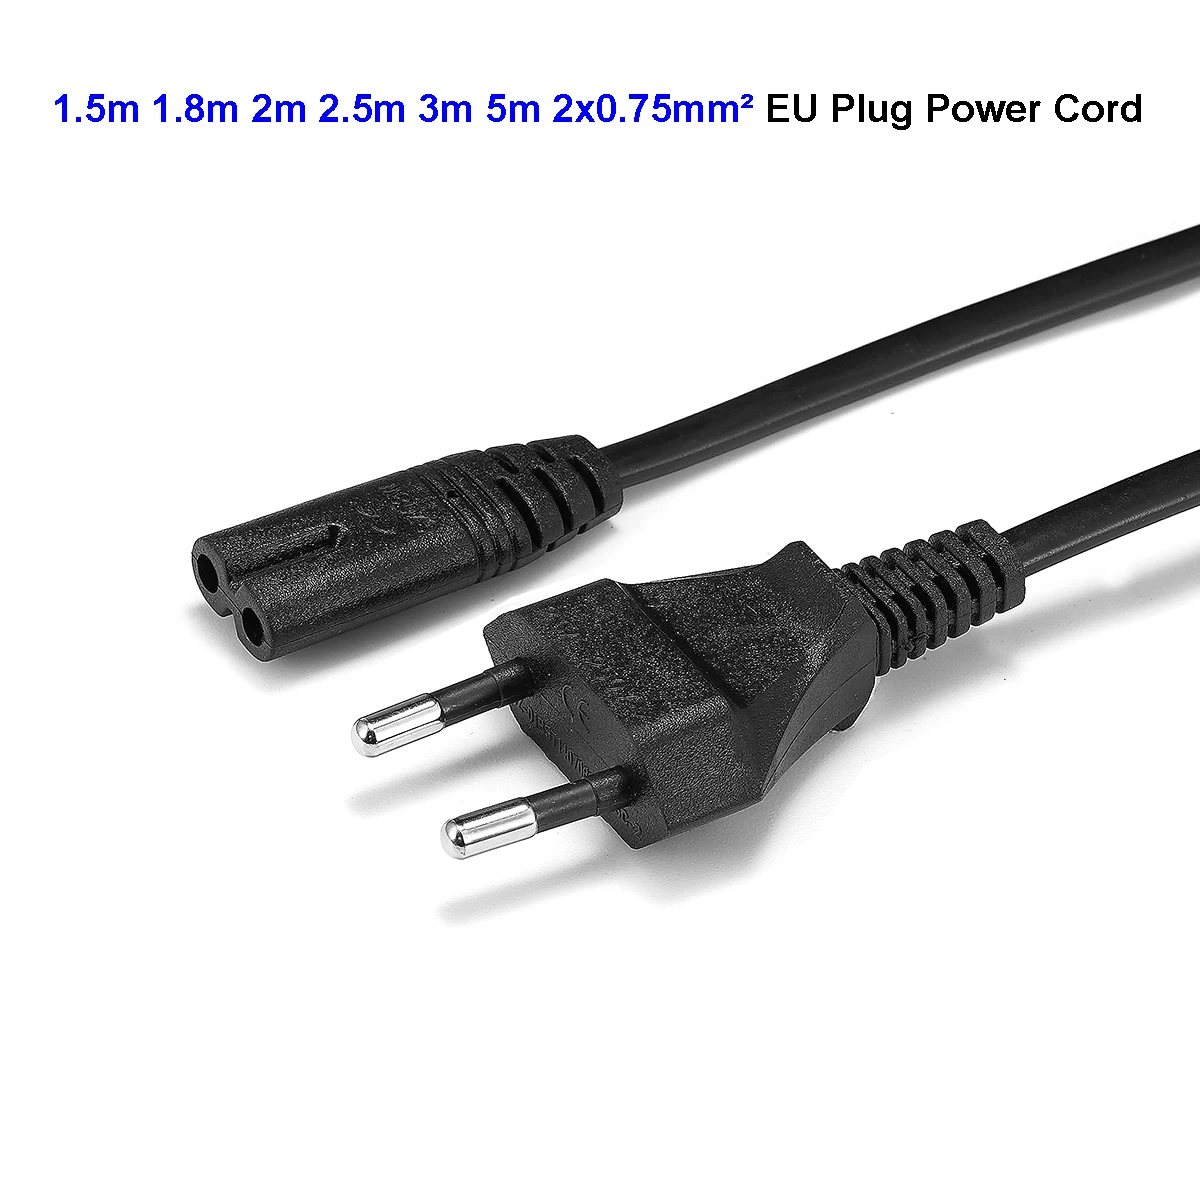 Консоль шнур питания евро IEC C7 кабель 10 футов Рисунок 8 кабель питания для sony PS2 PS3 PS4 тонкий microsoft xbox One S зарядное устройство для батареи ТВ